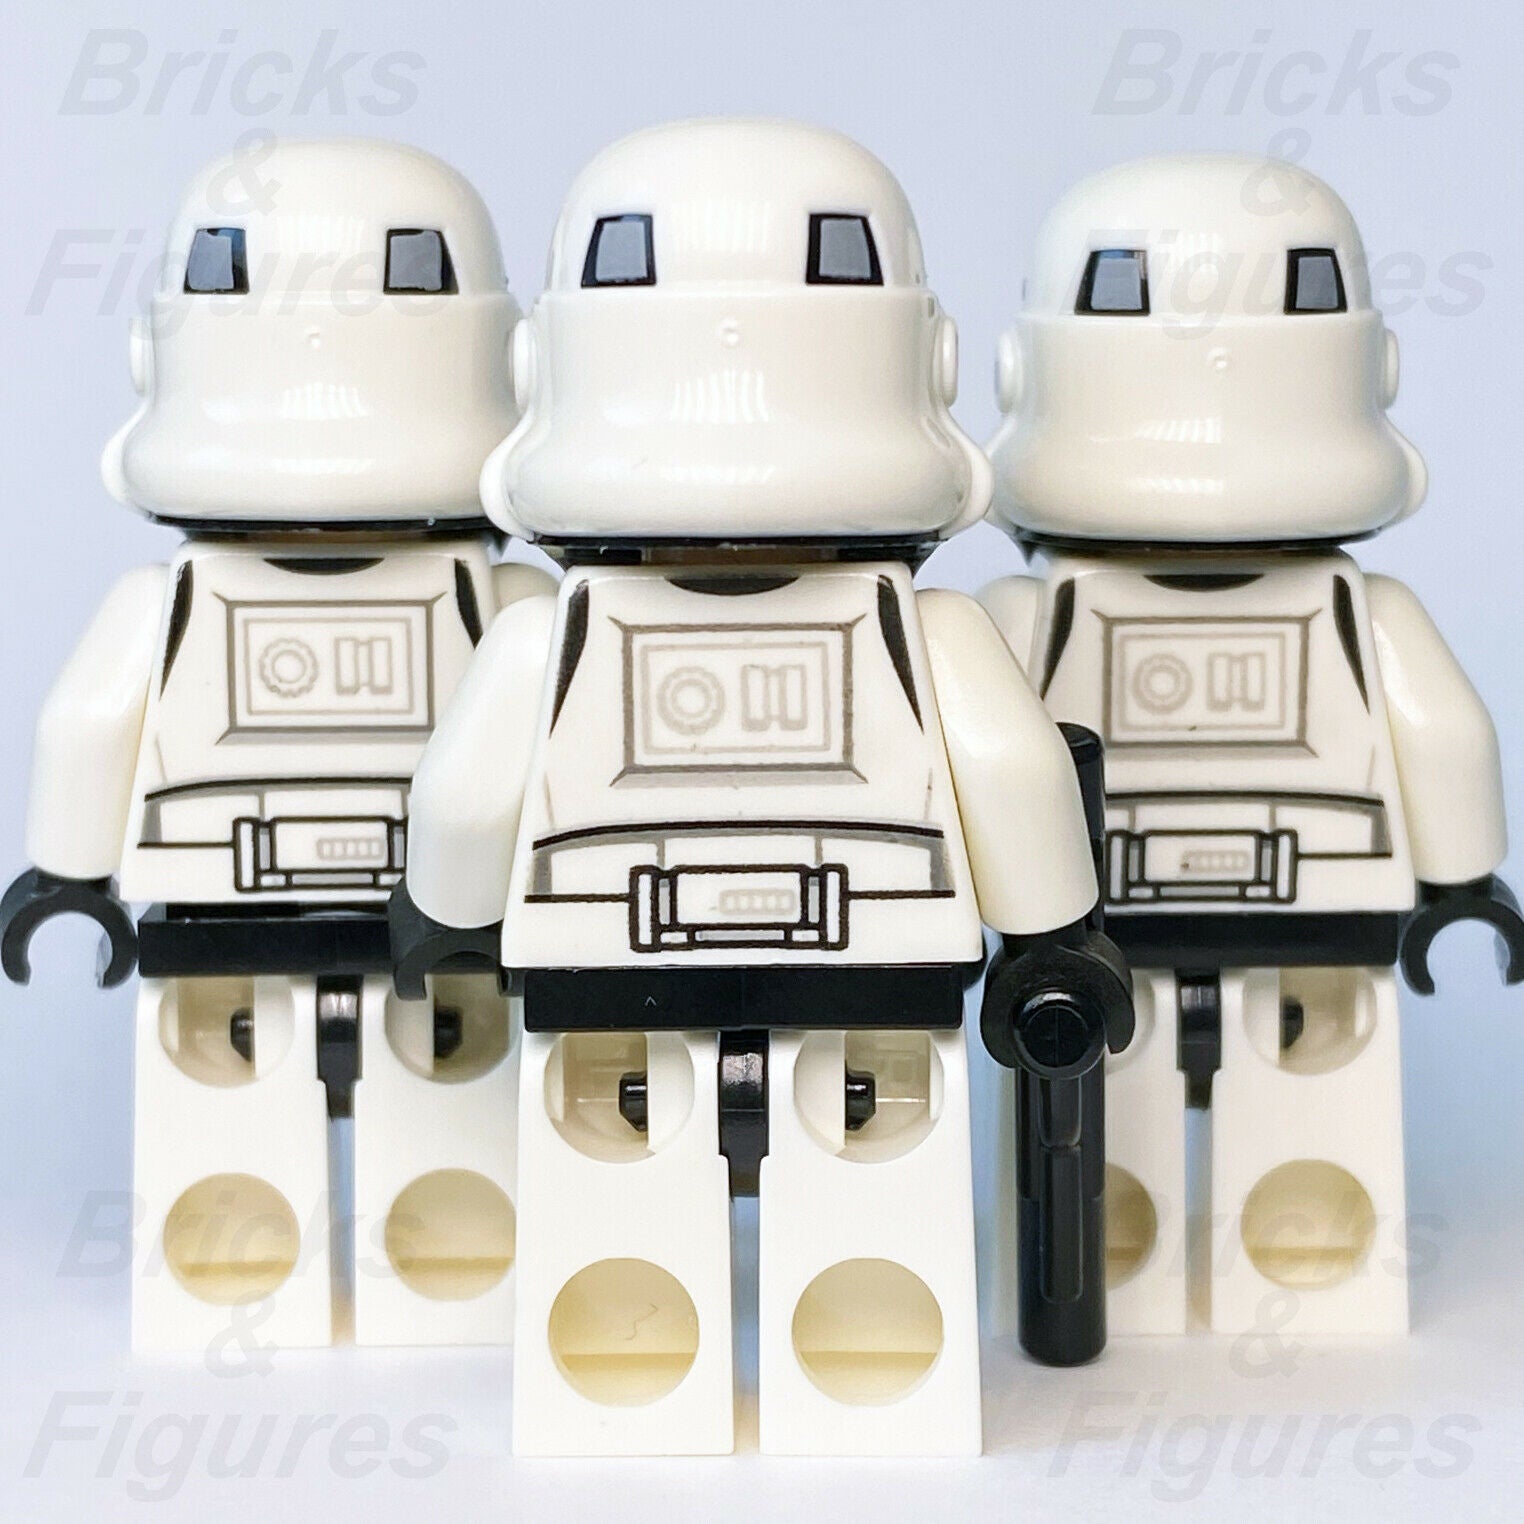 3 x Star Wars LEGO Imperial Stormtrooper Minifigure 75229 75262 75235 Genuine - Bricks & Figures